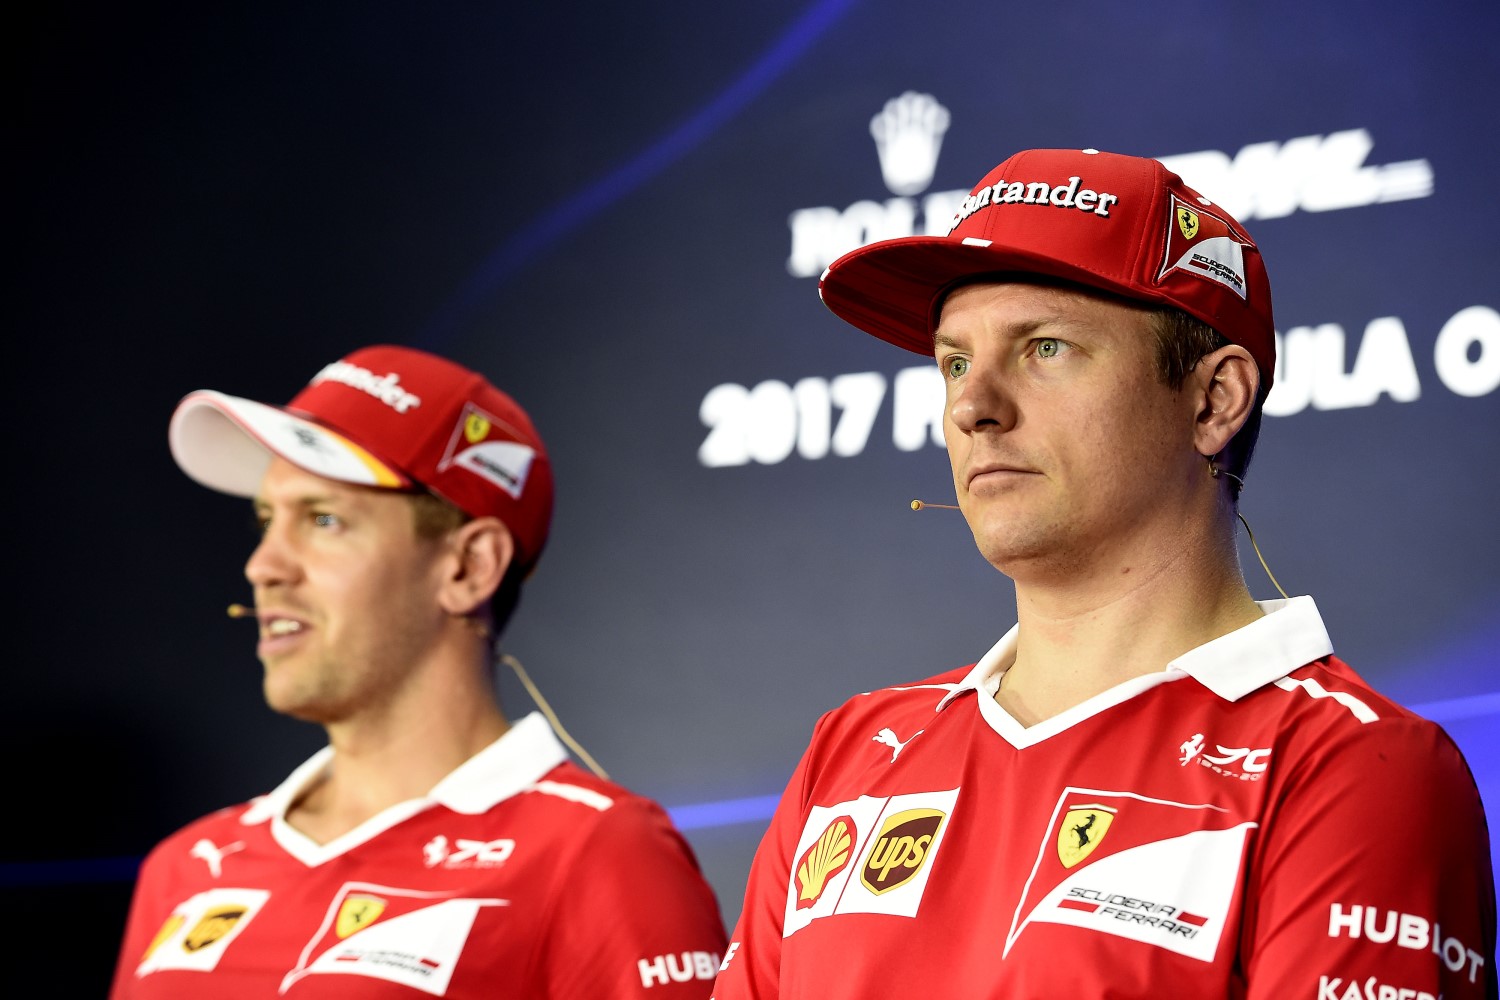 Ferrari drivers hope for the best